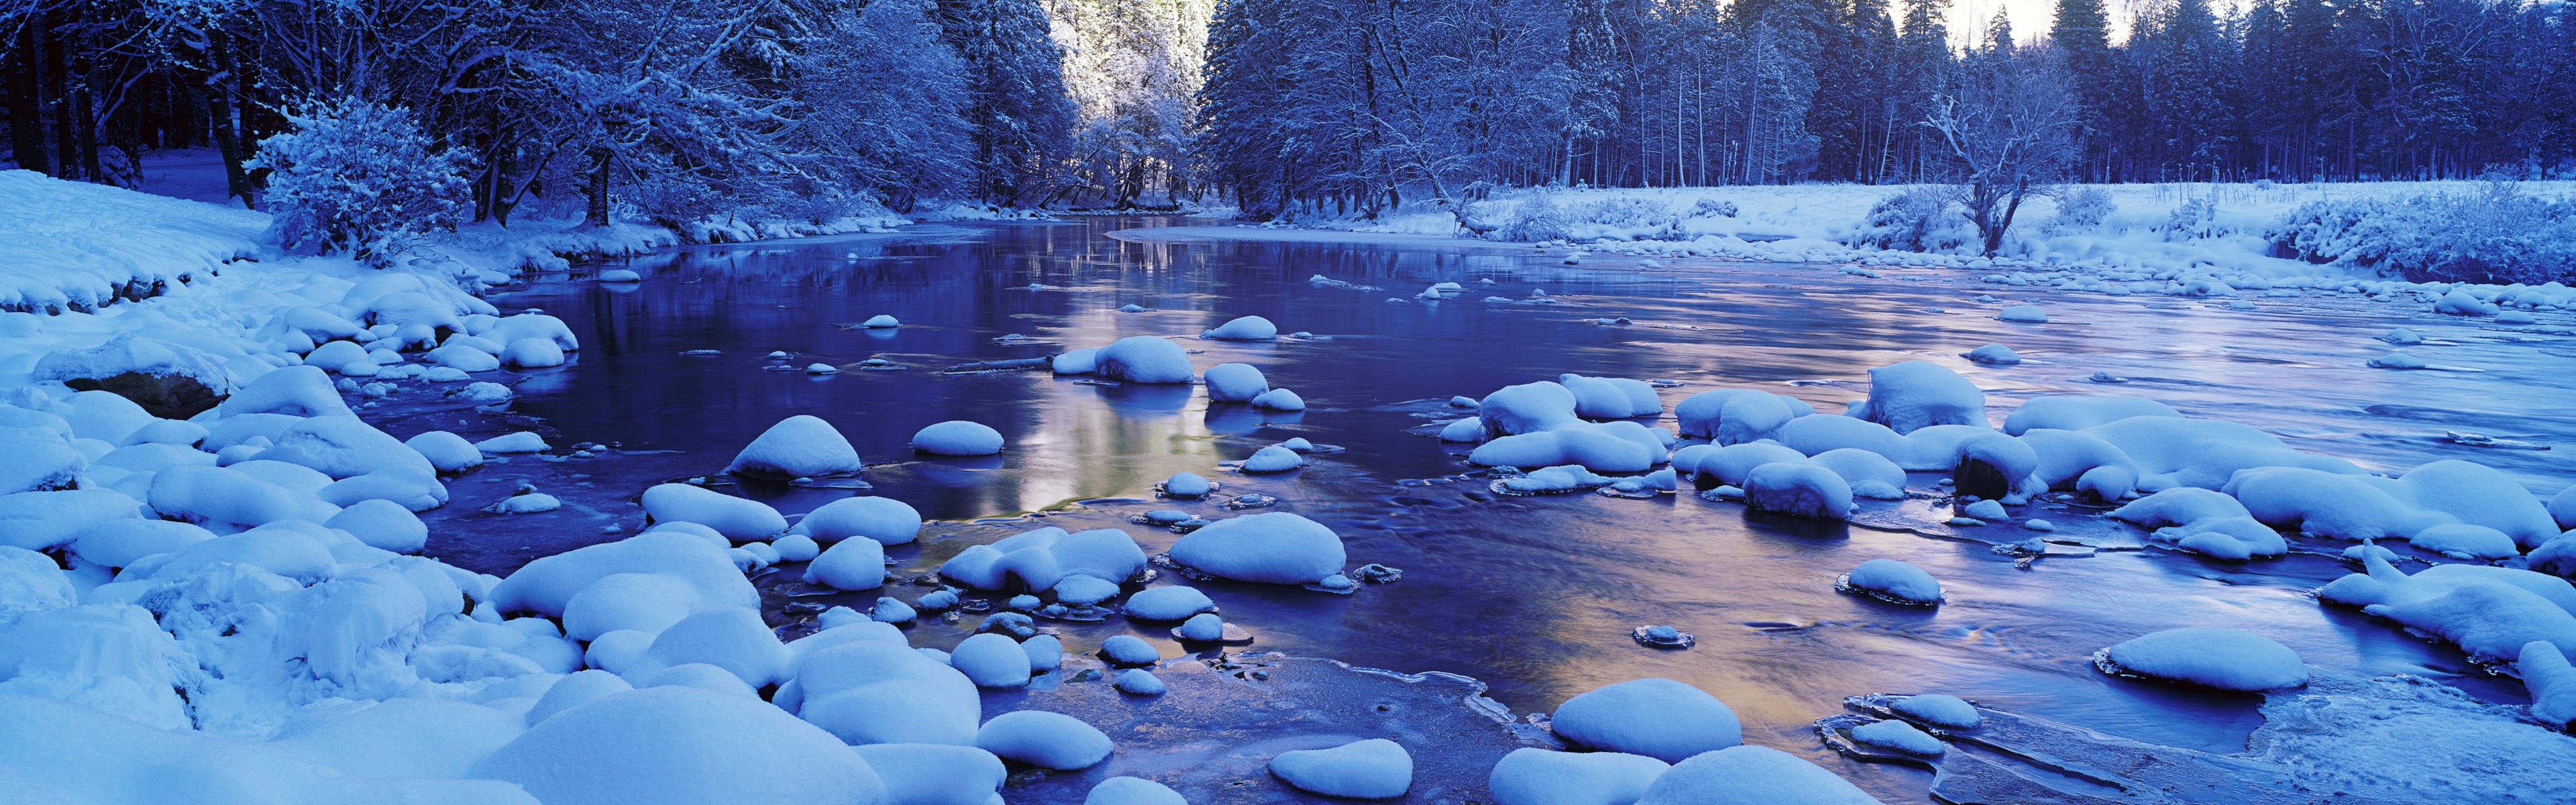 Schöne kalten Winter Schnee, Windows 8 Panorama-Widescreen-Wallpaper #3 - 3840x1200